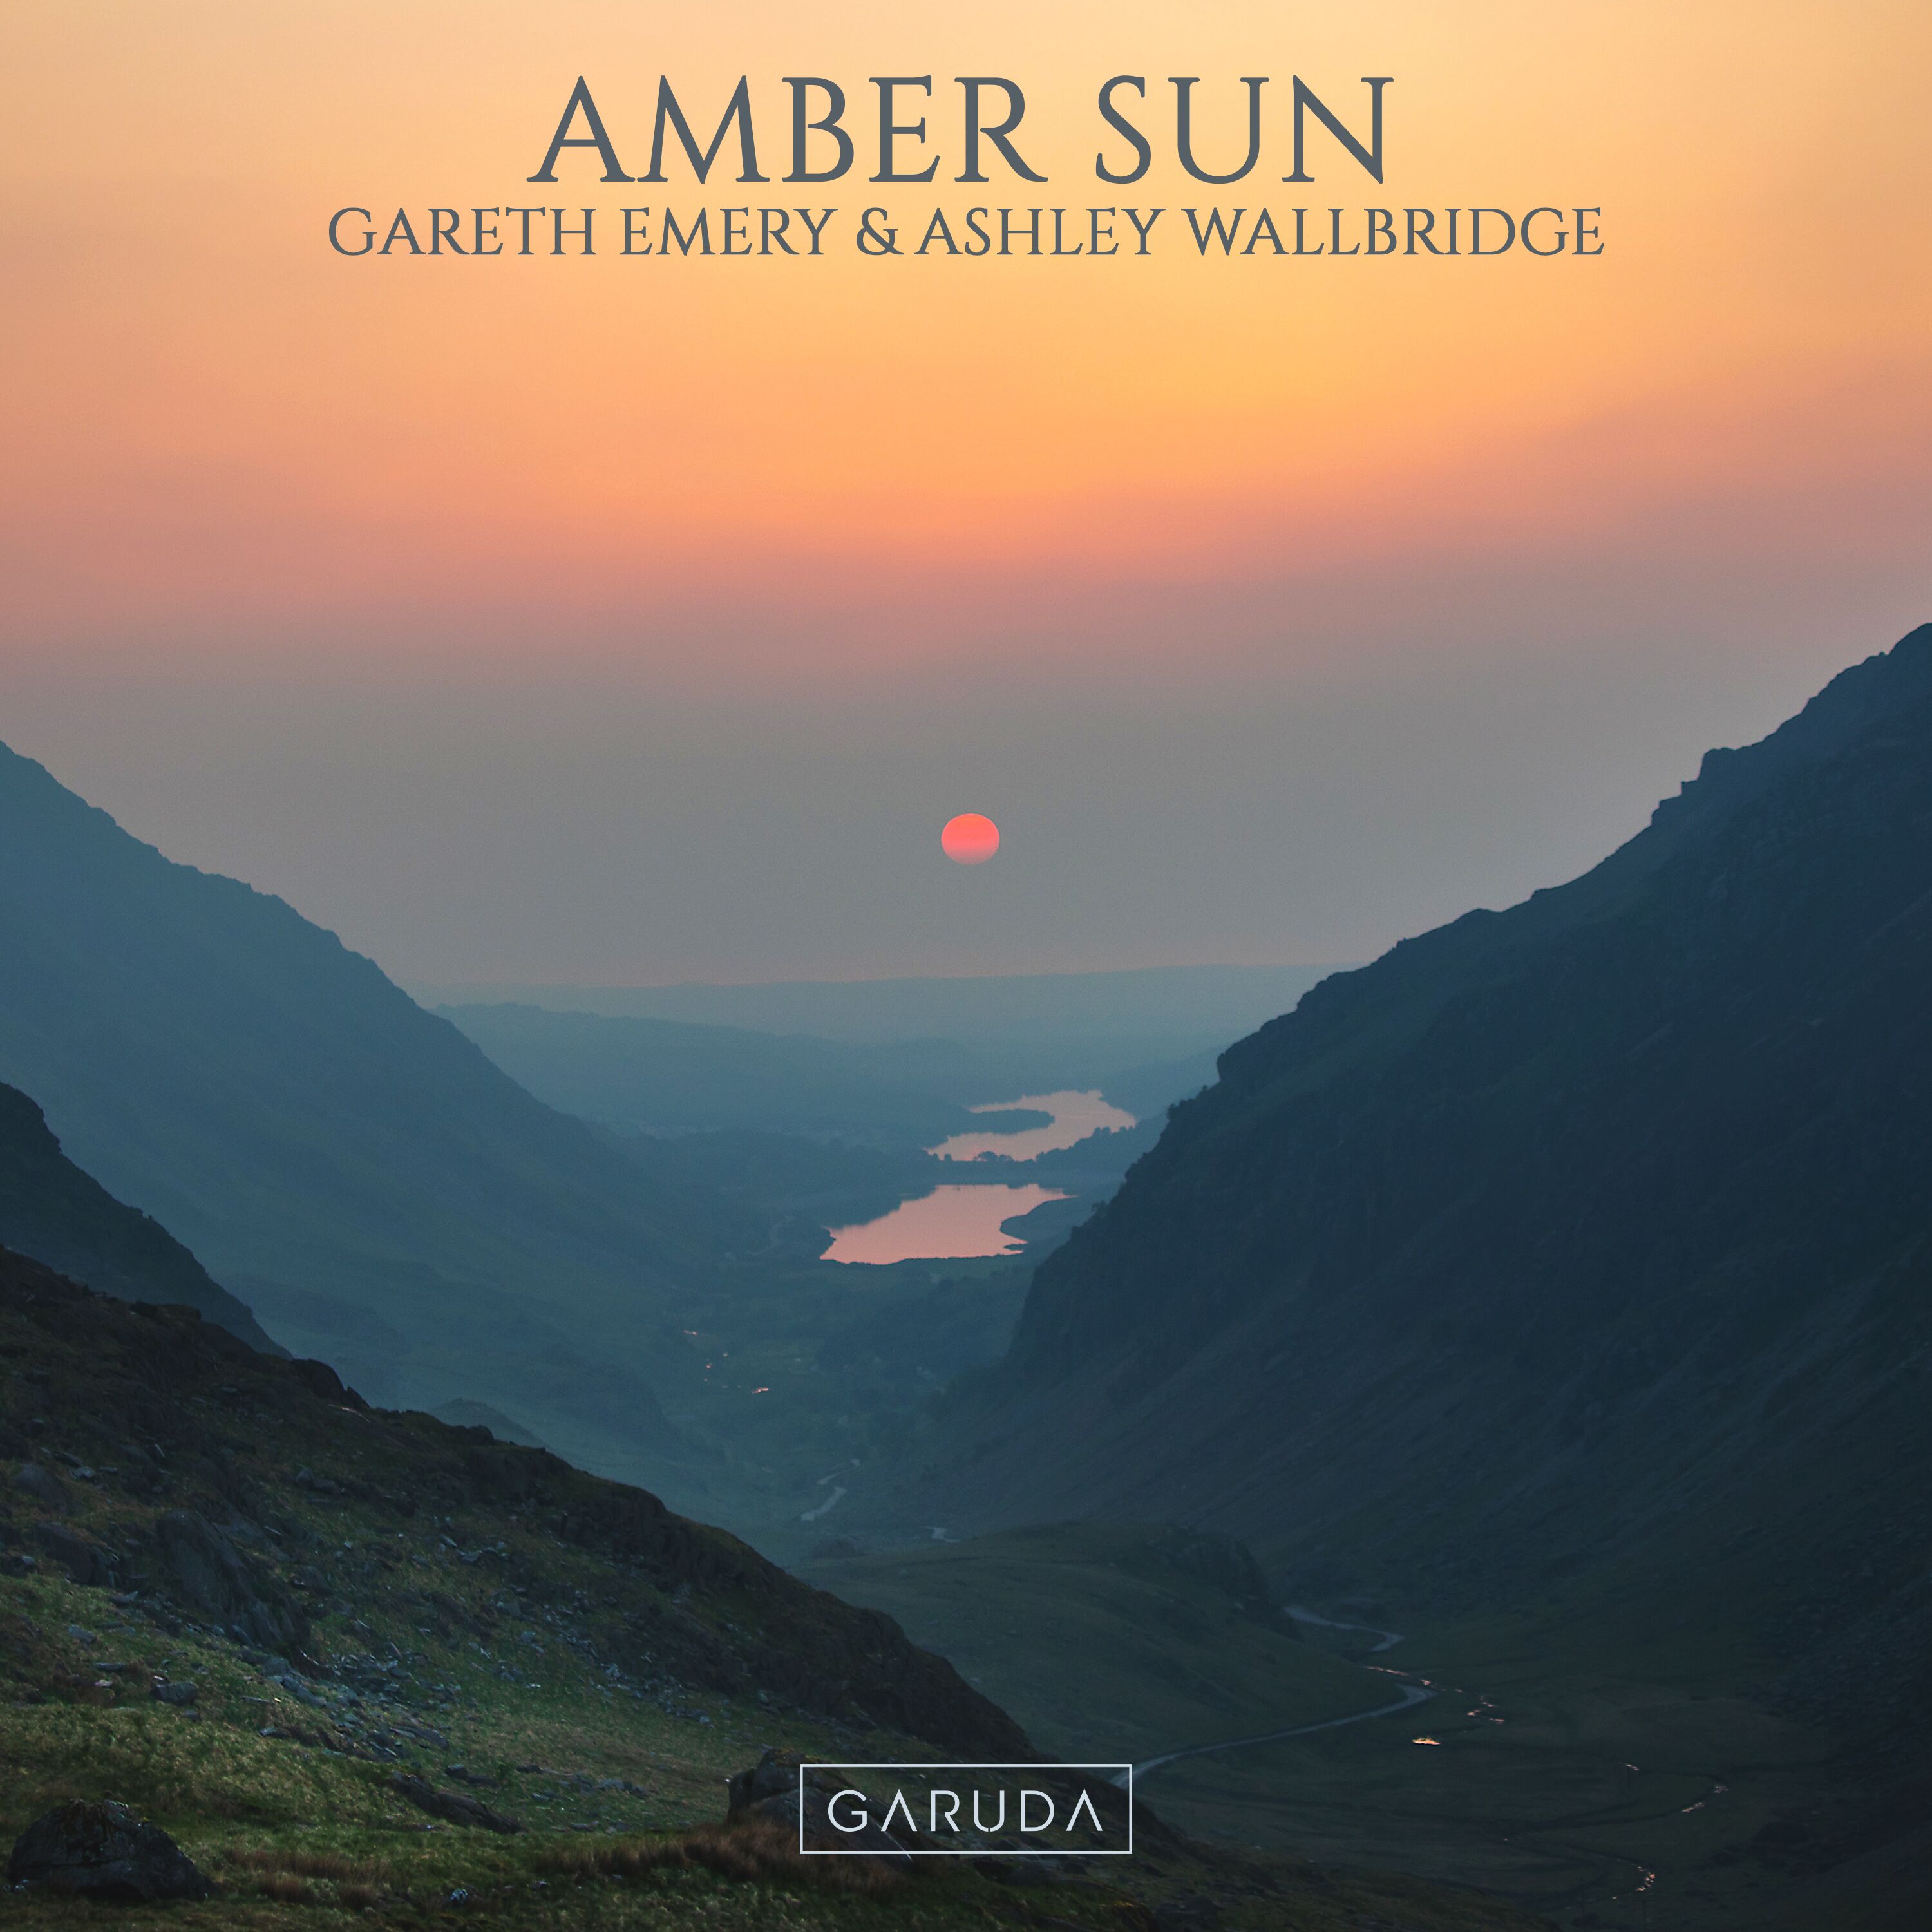 Gareth Emery and Ashley Wallbridge presents Amber Sun on Garuda / Armada Music